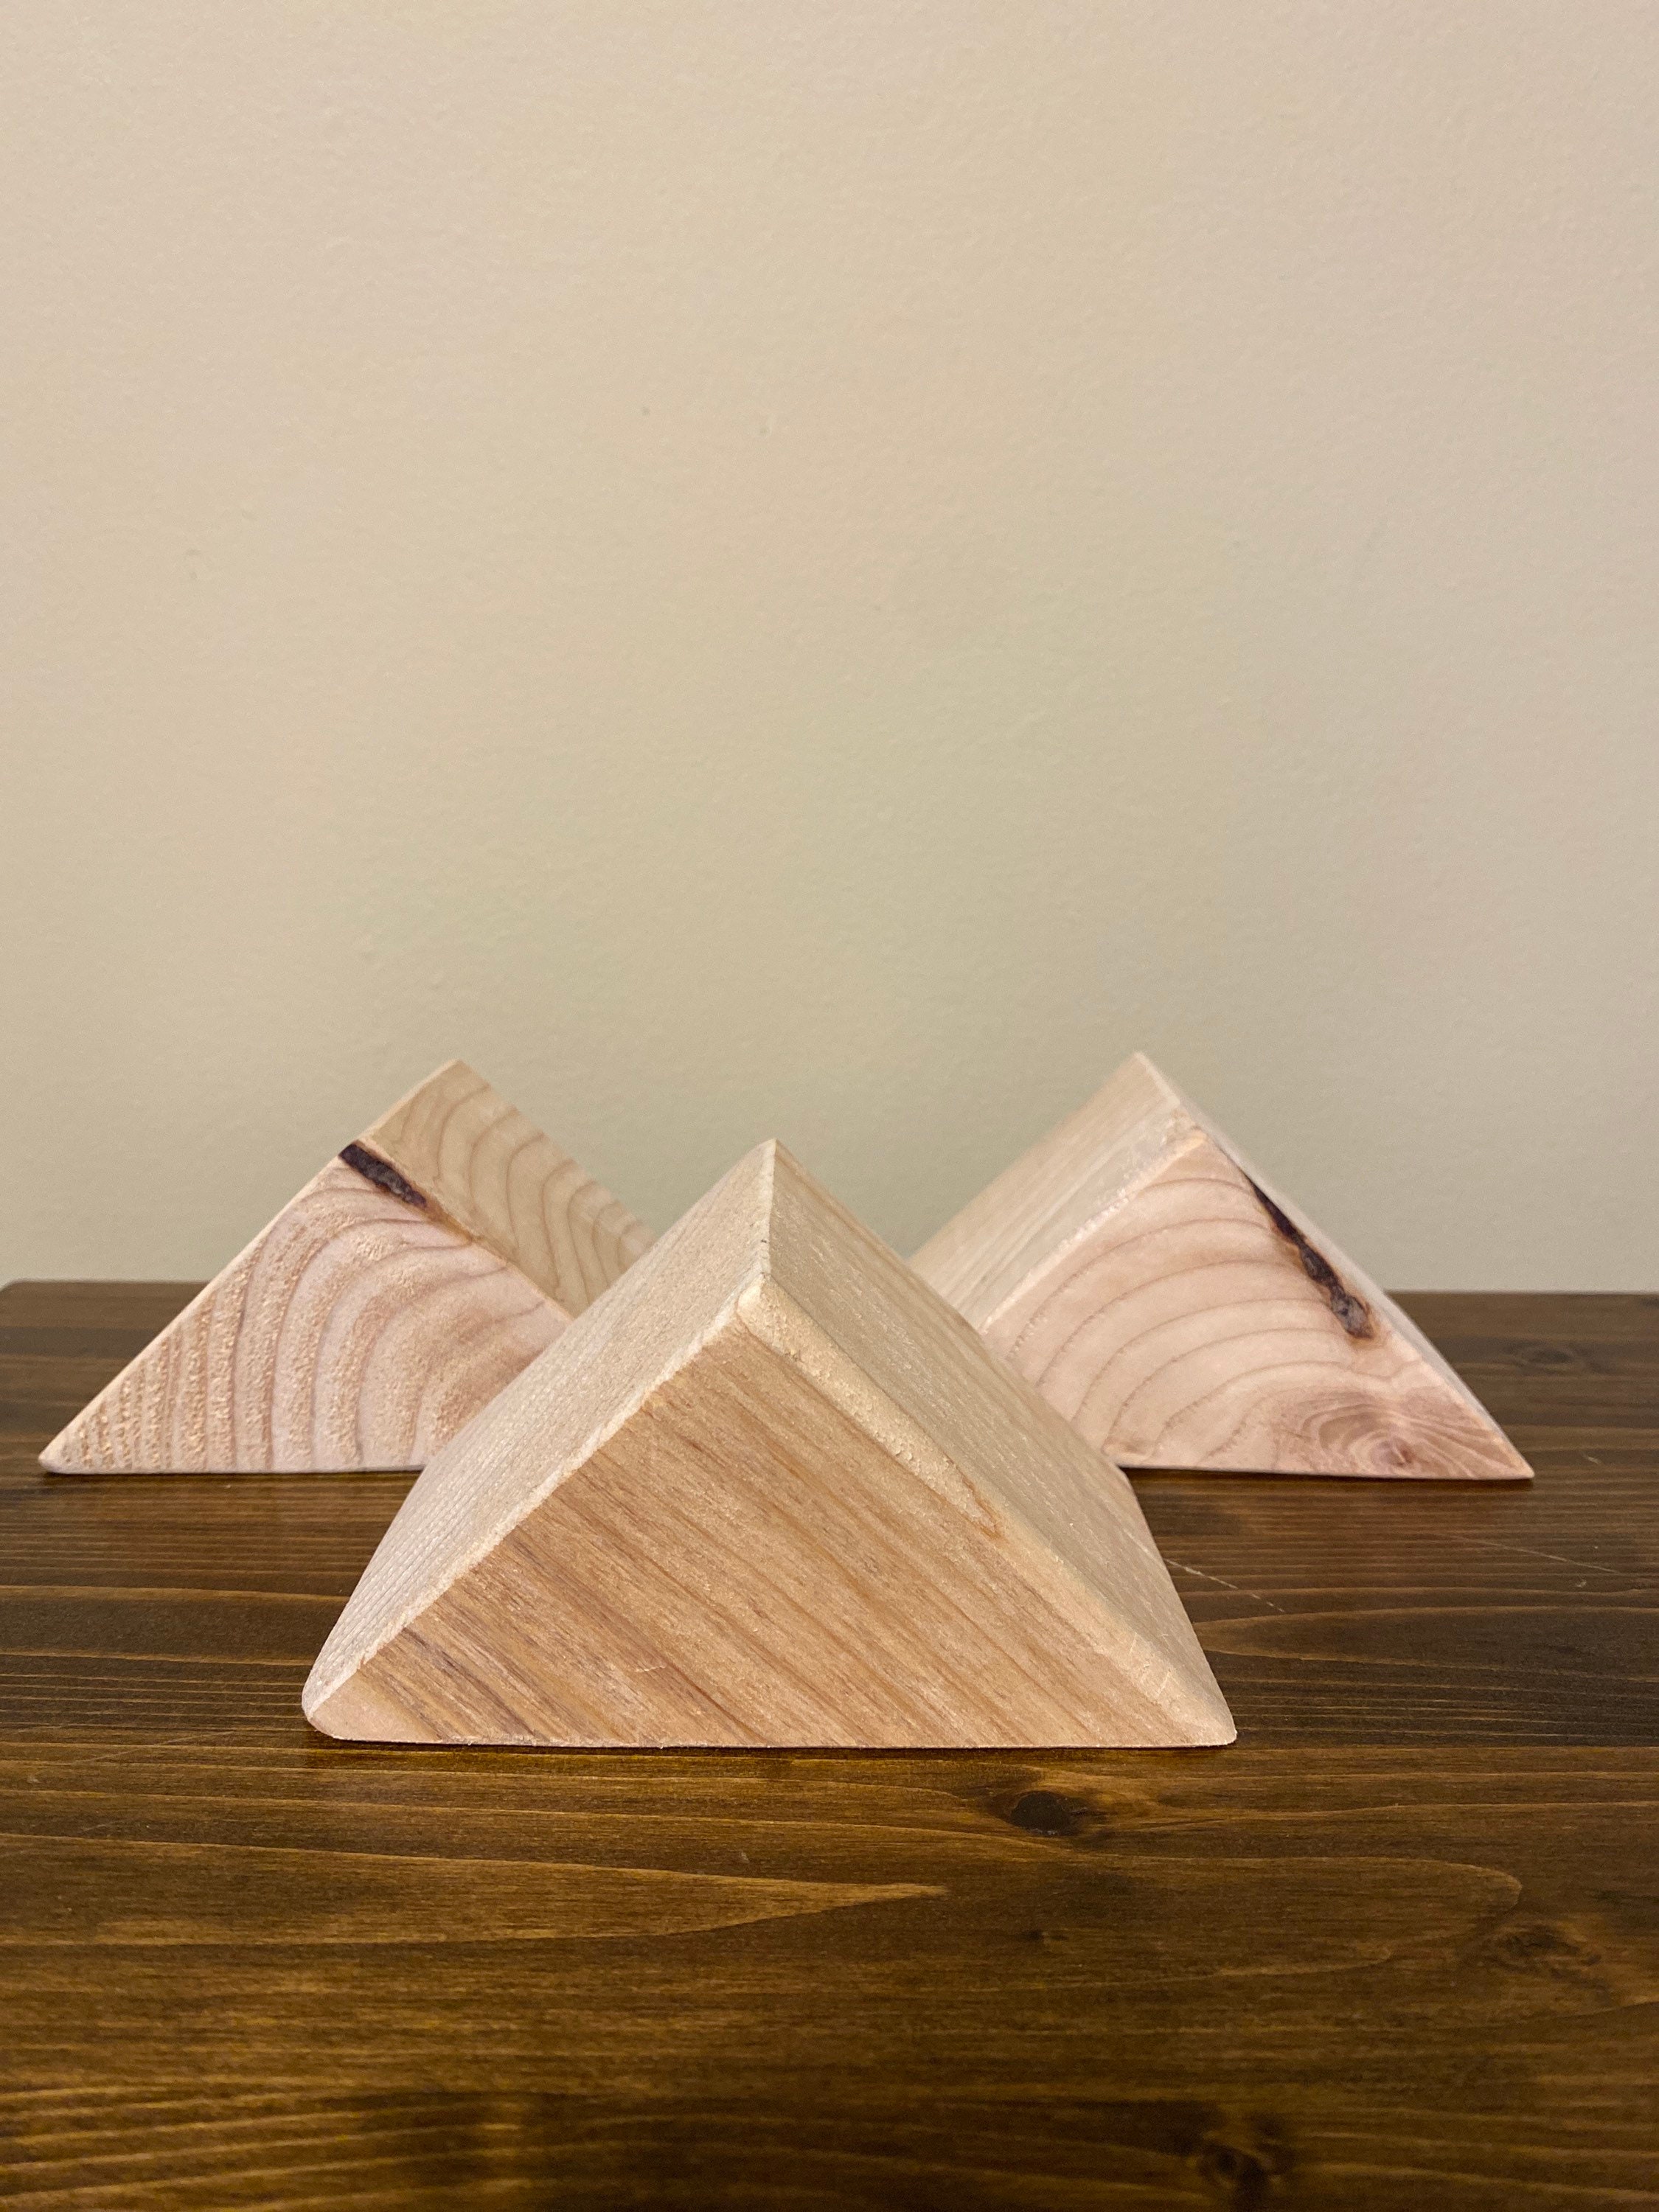 Mini Triangle Wood Blocks, Unfinished